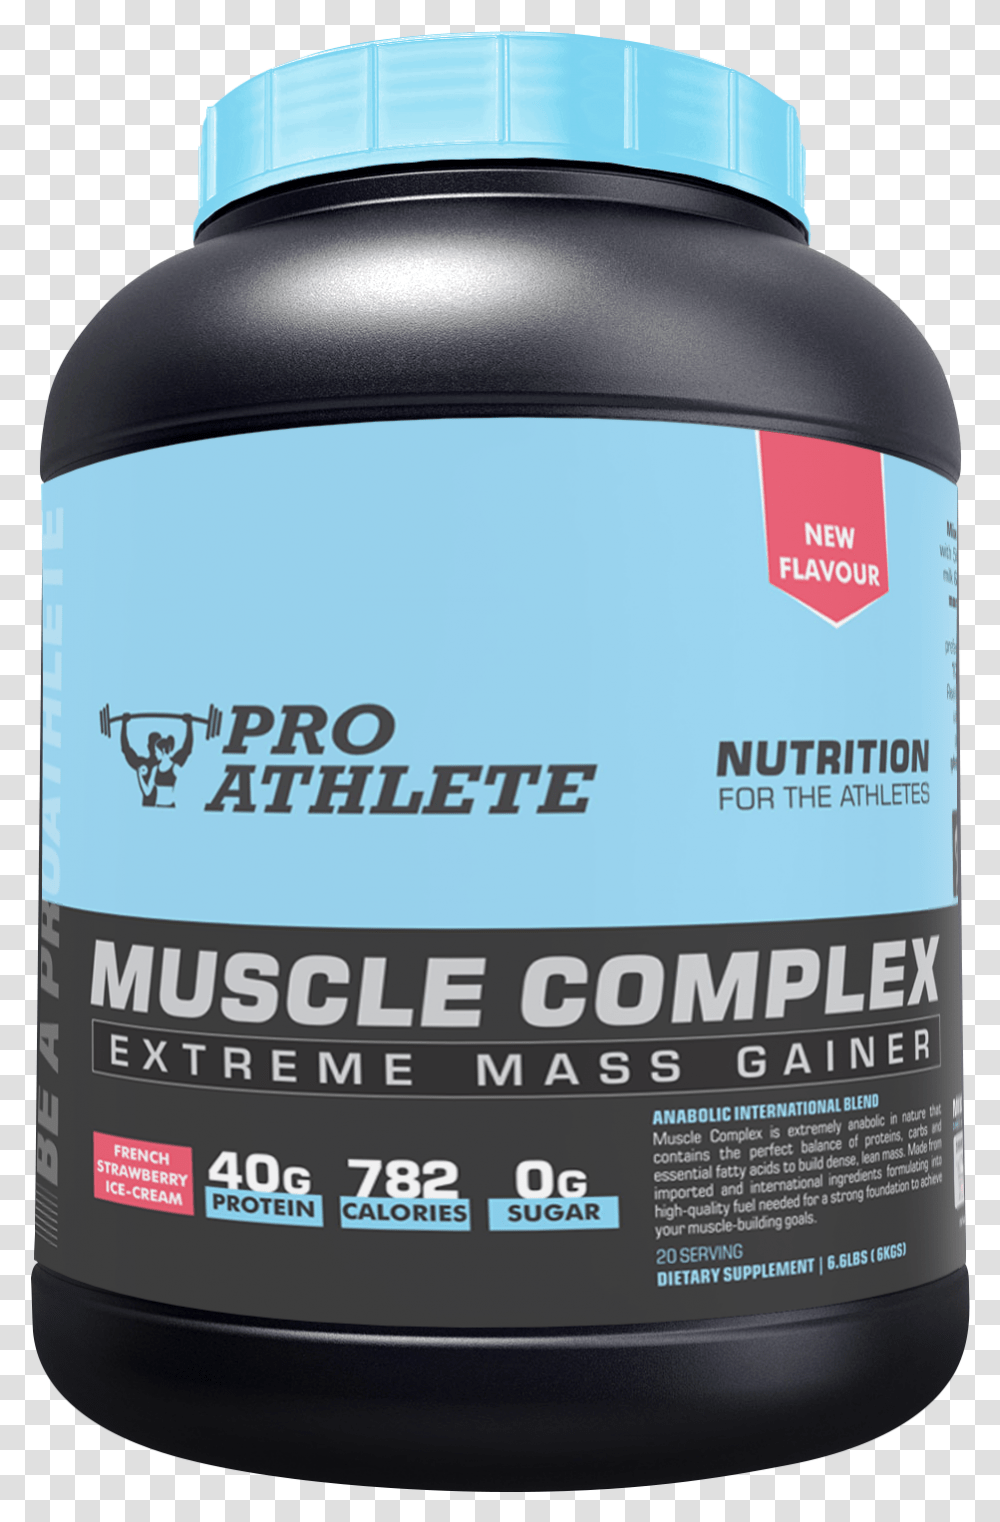 Muscle Complex Pro Athlete Nutrition For The Athletes, Lamp, Bottle, Label Transparent Png